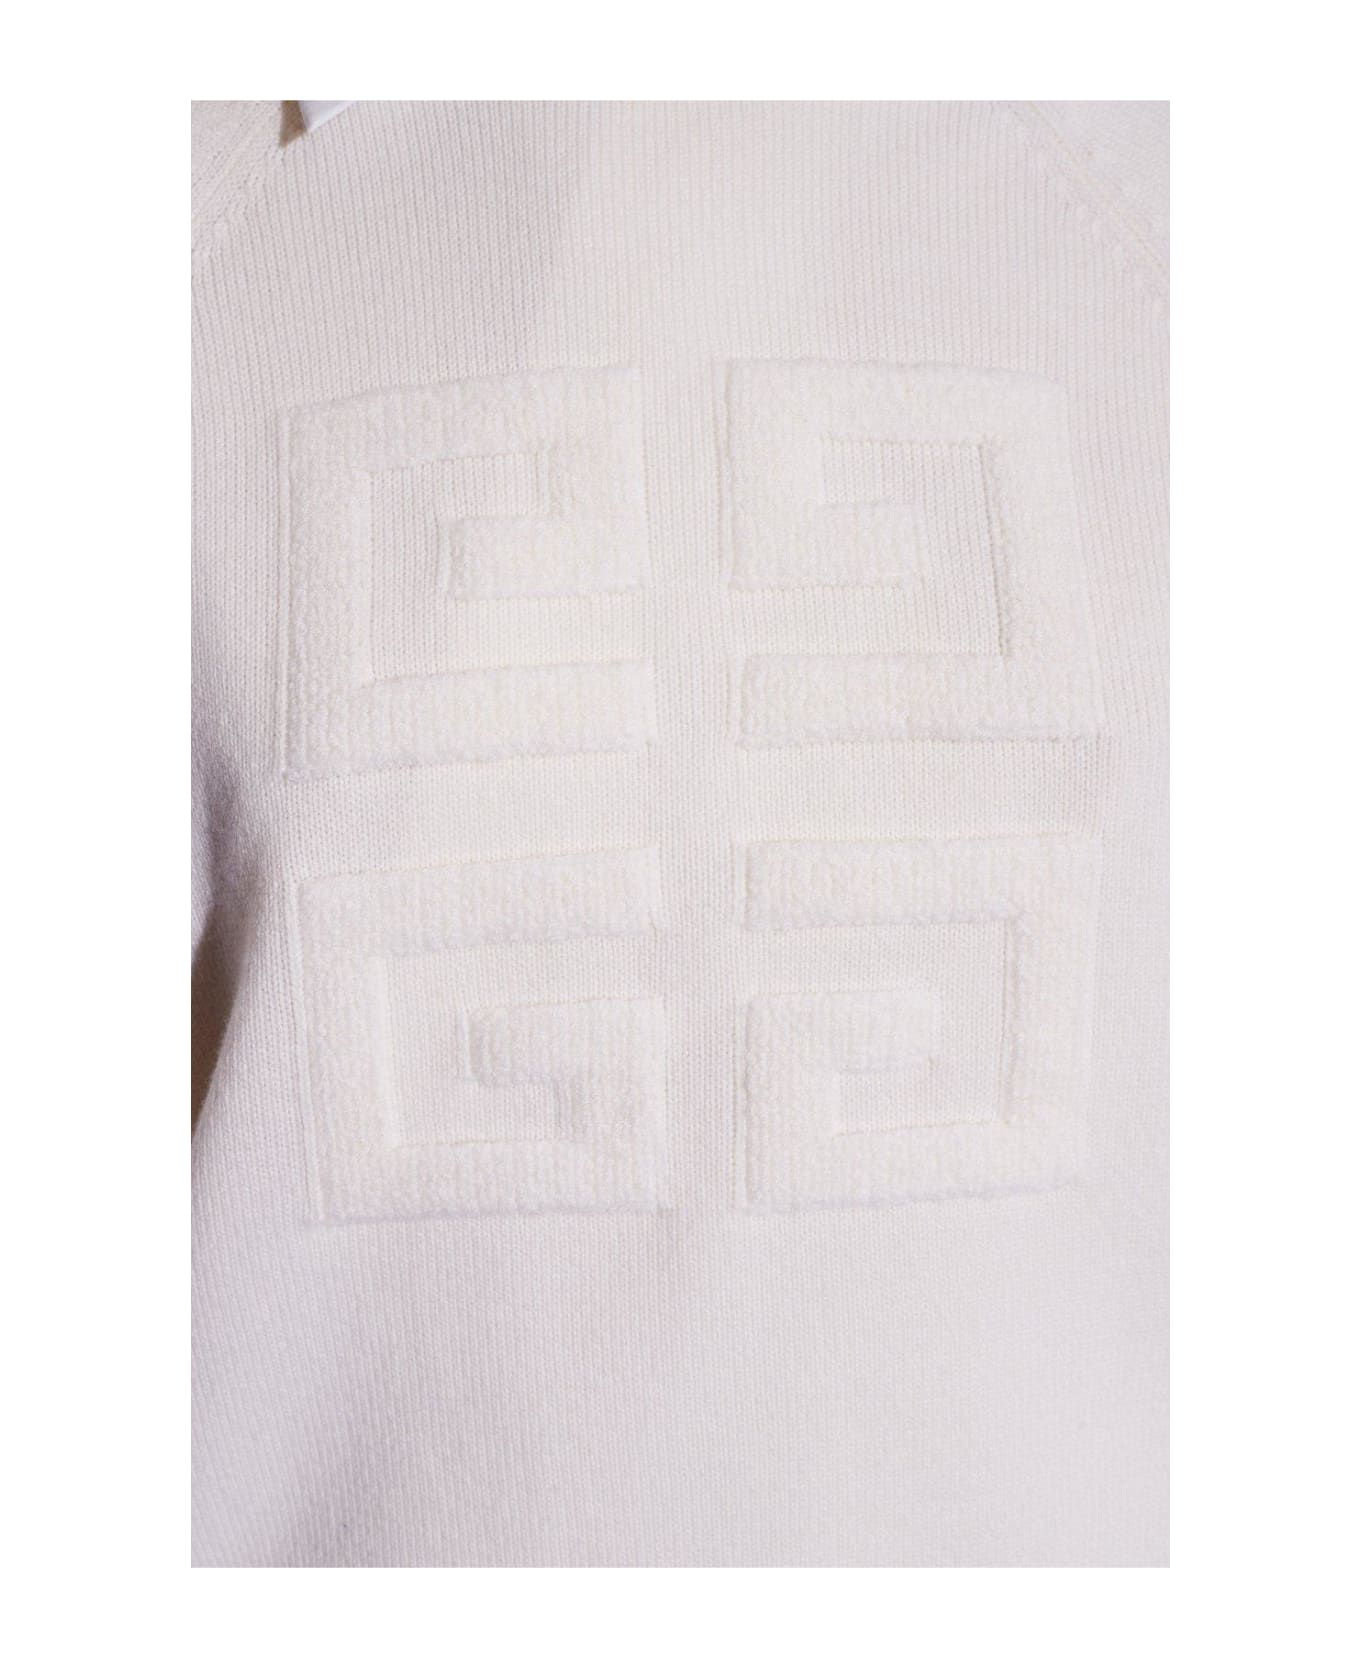 Givenchy 4g Emblem Knit Jumper - White フリース